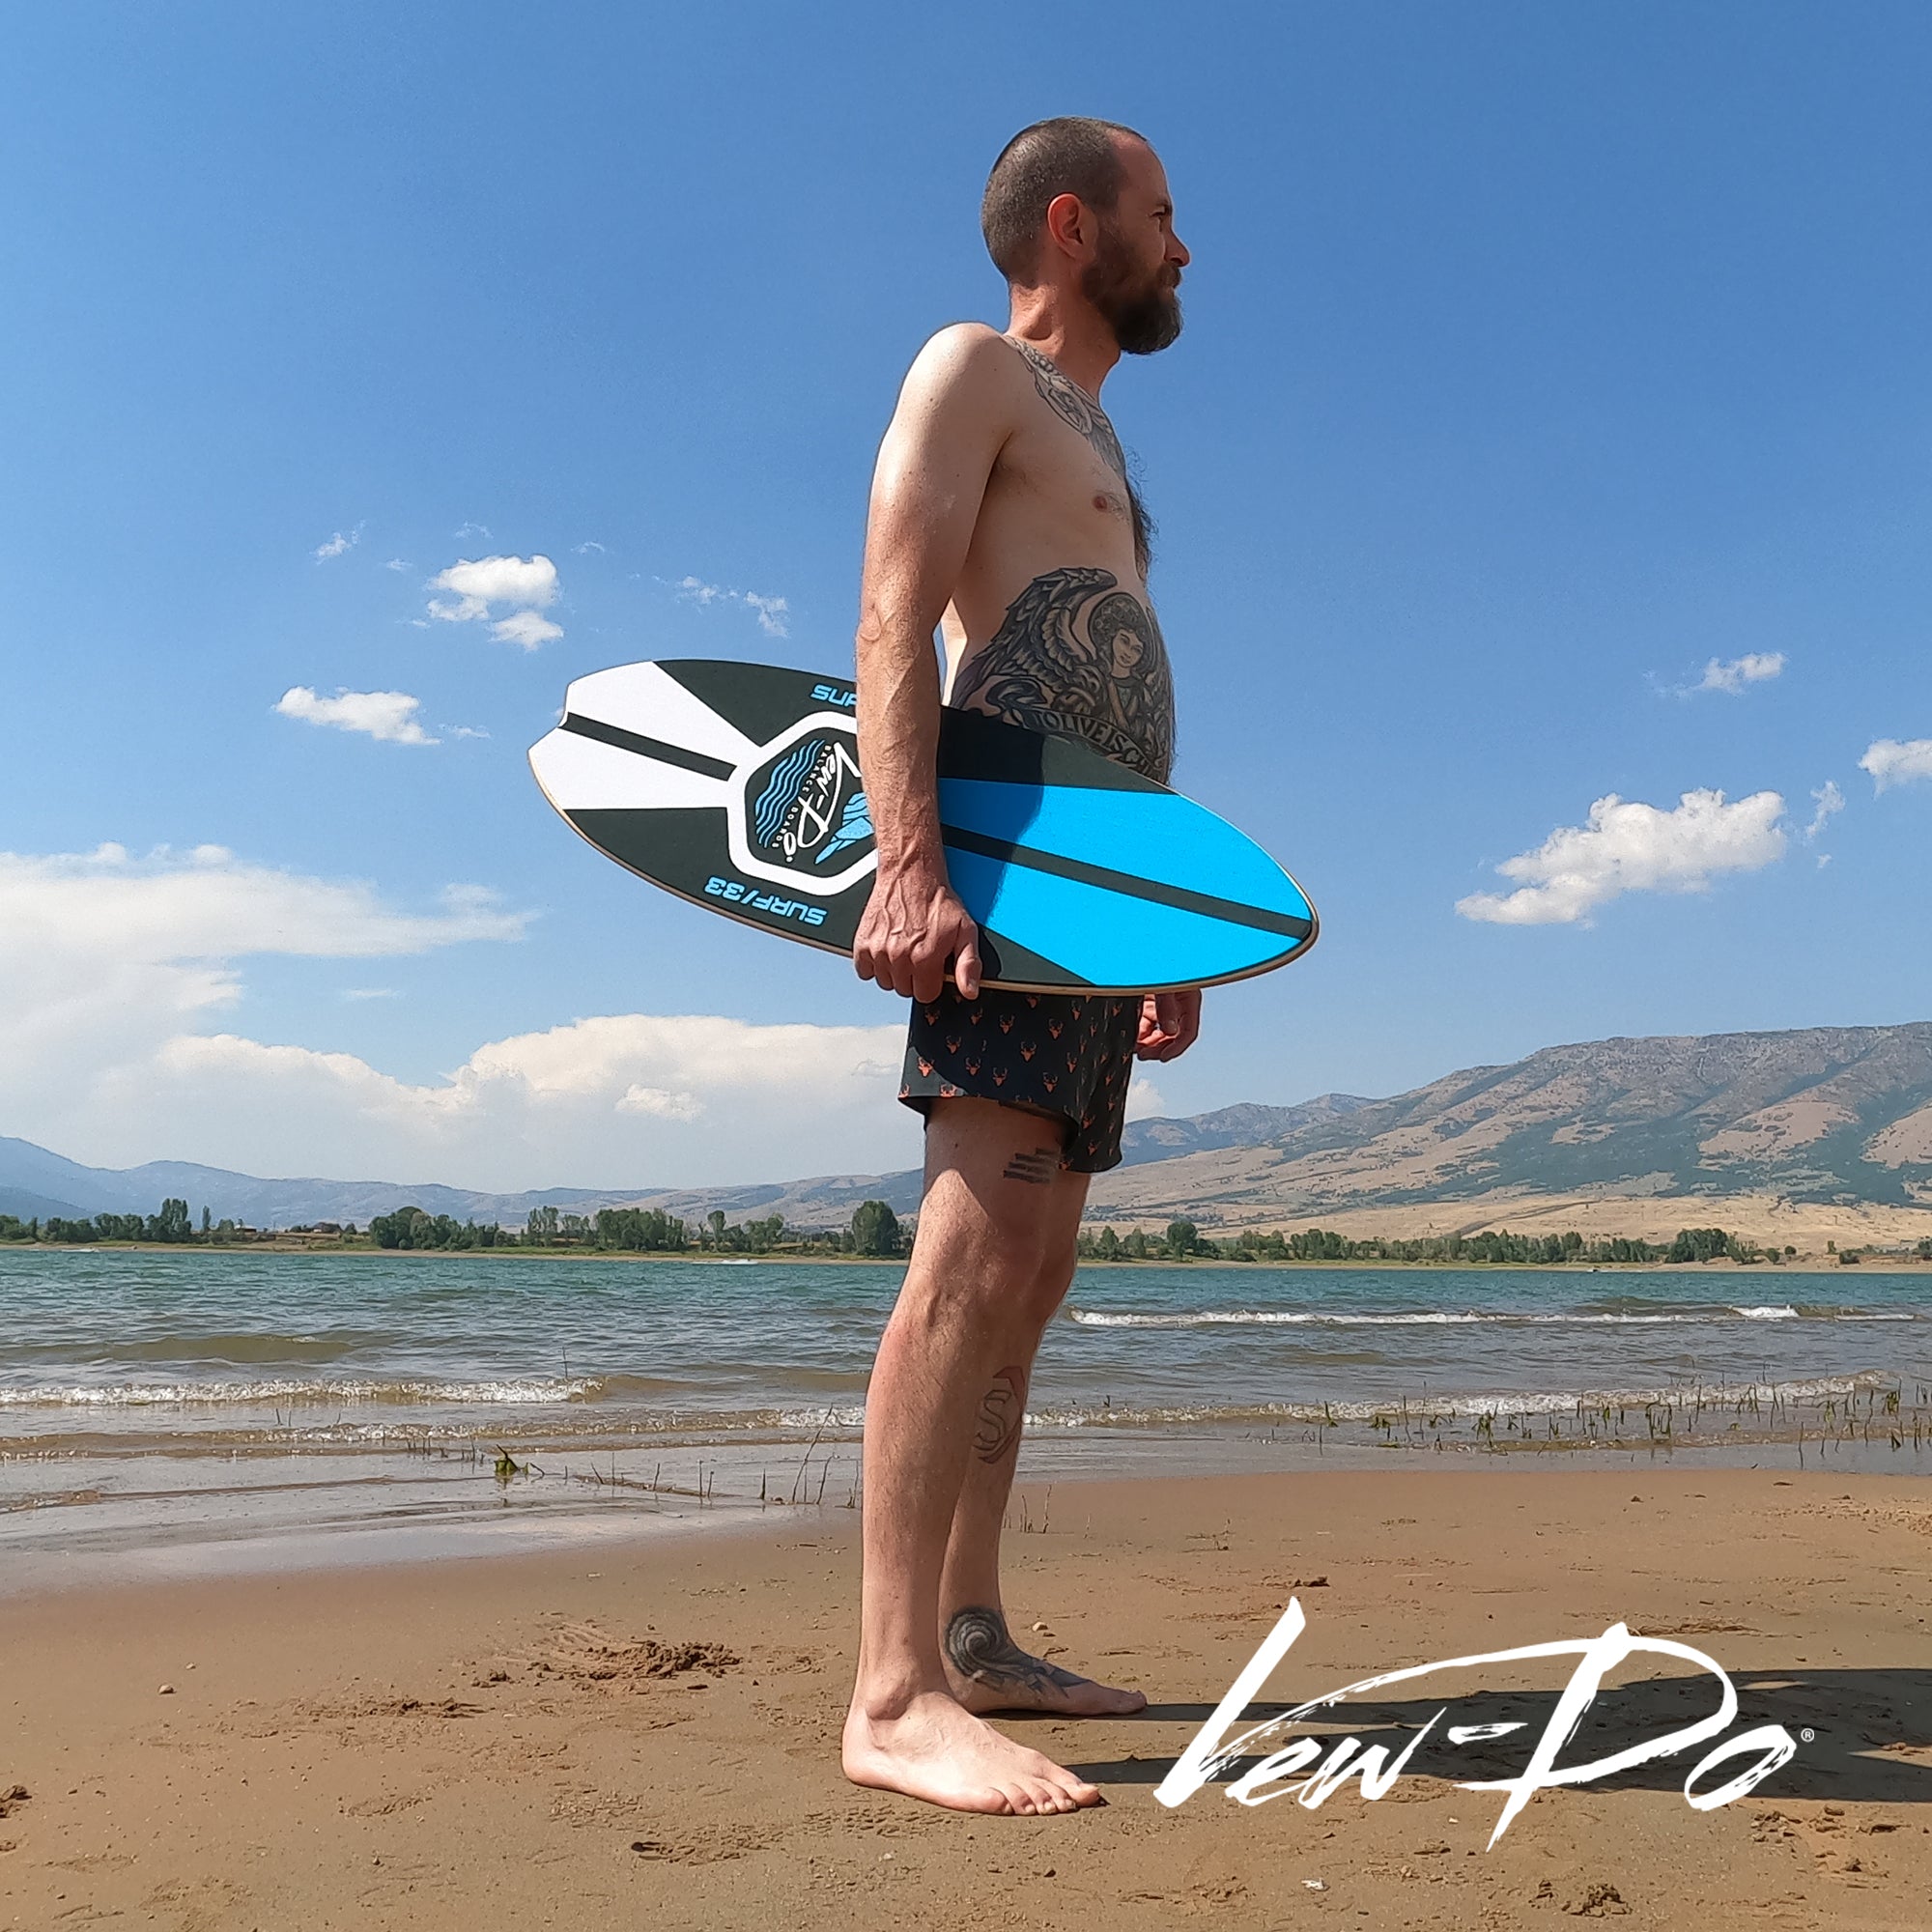 SWELL Wakesurf - Tonka Balance Board - Best Training Tool For Surfing